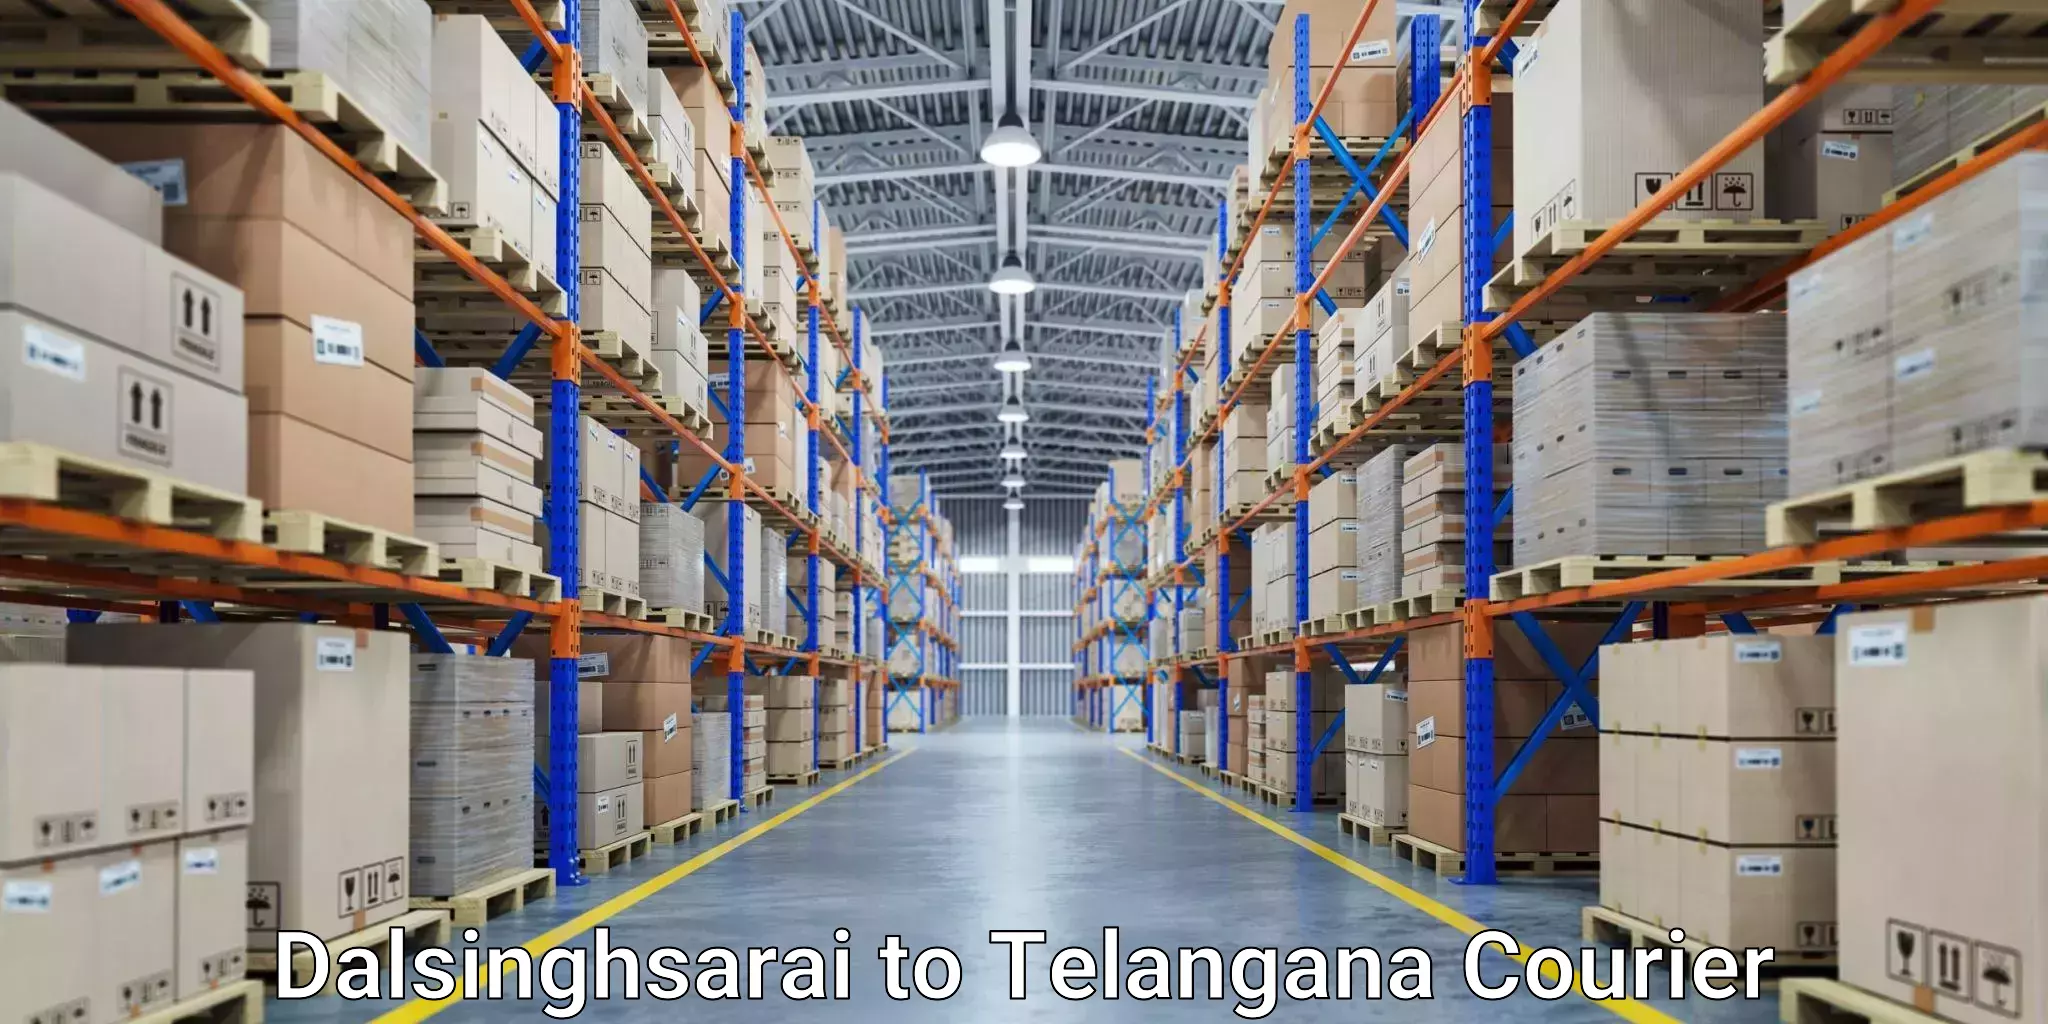 Reliable logistics providers Dalsinghsarai to Sathupally